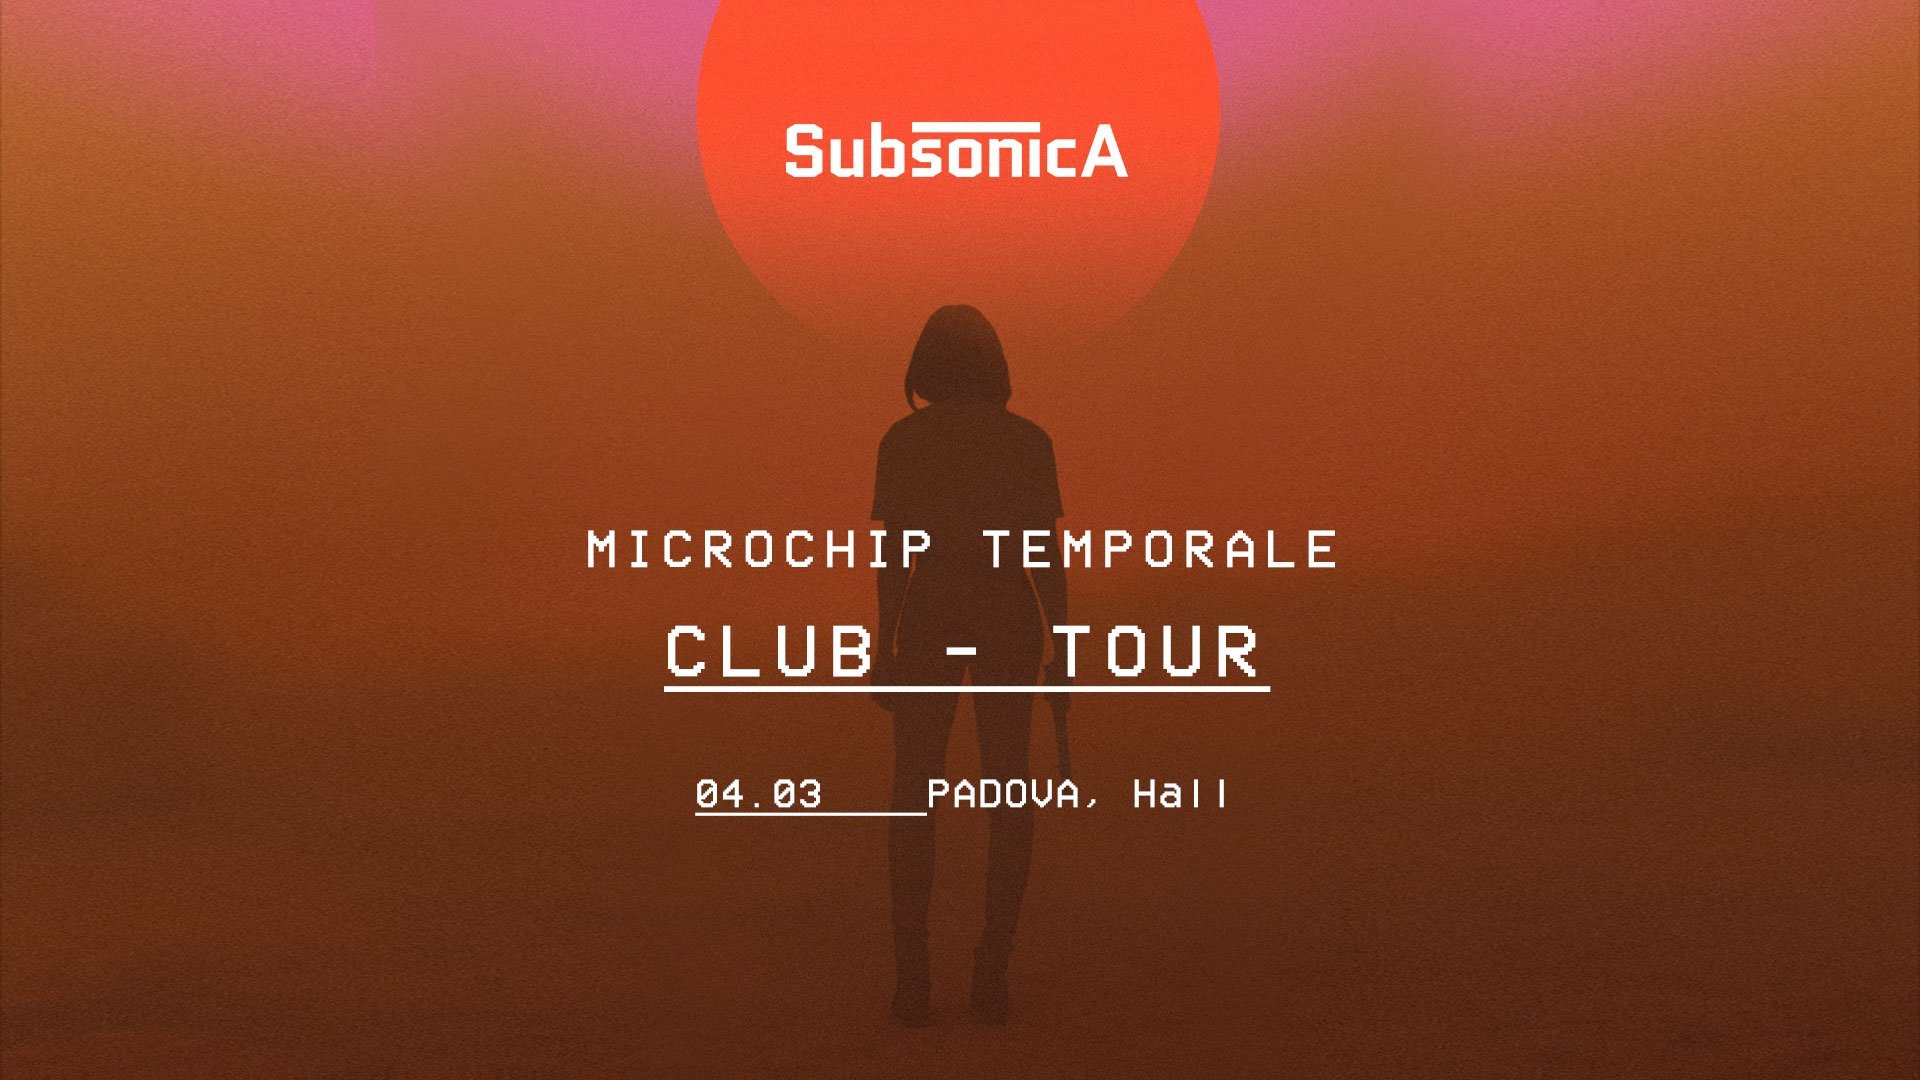 Hall di Padova, Subsonica, Microchip Temporale Club Tour